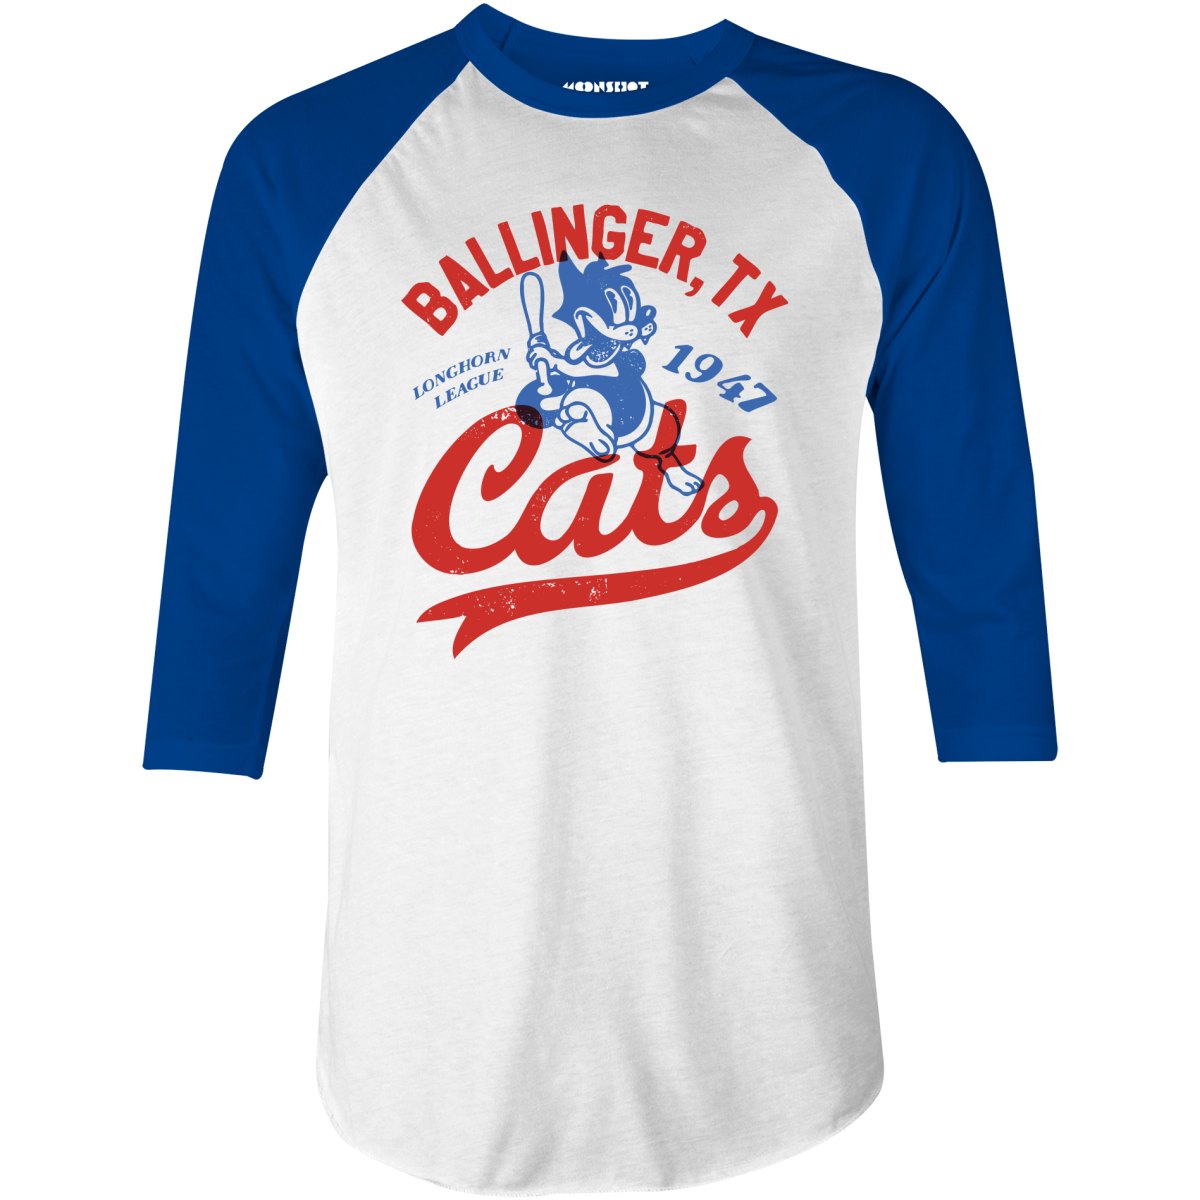 Ballinger Cats - Texas - Vintage Defunct Baseball Teams - 3/4 Sleeve Raglan T-Shirt